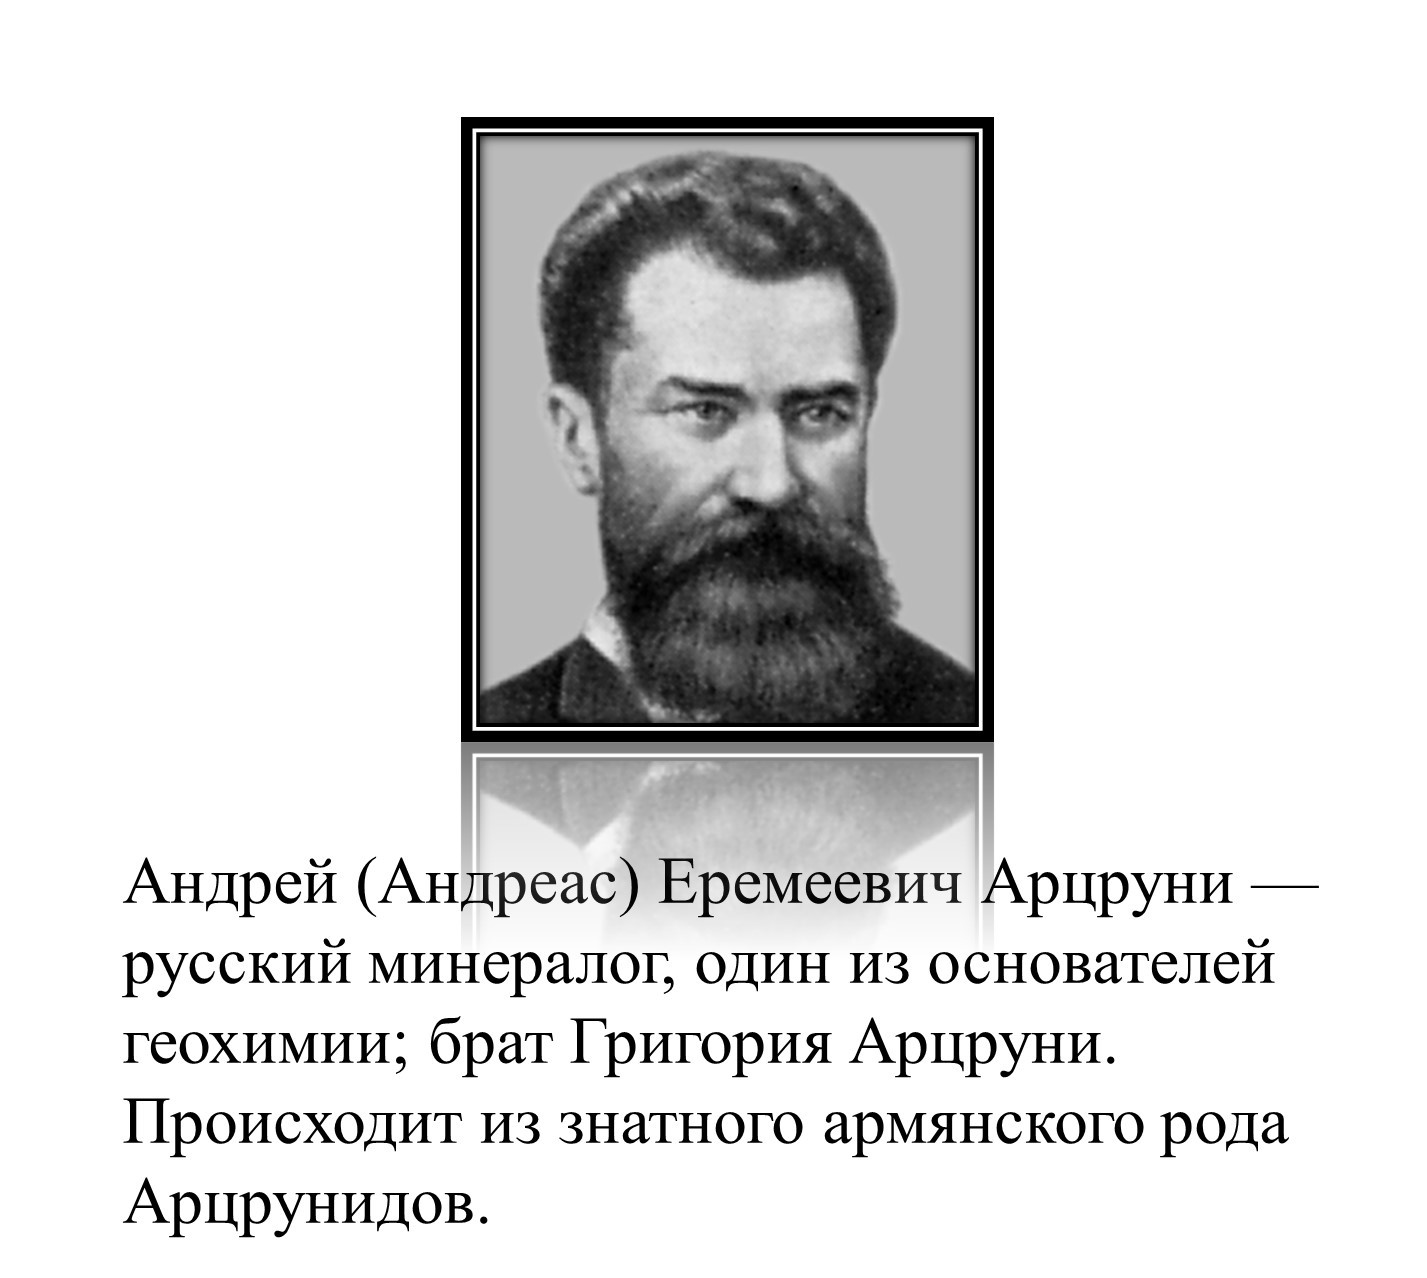 Андрей Арцруни